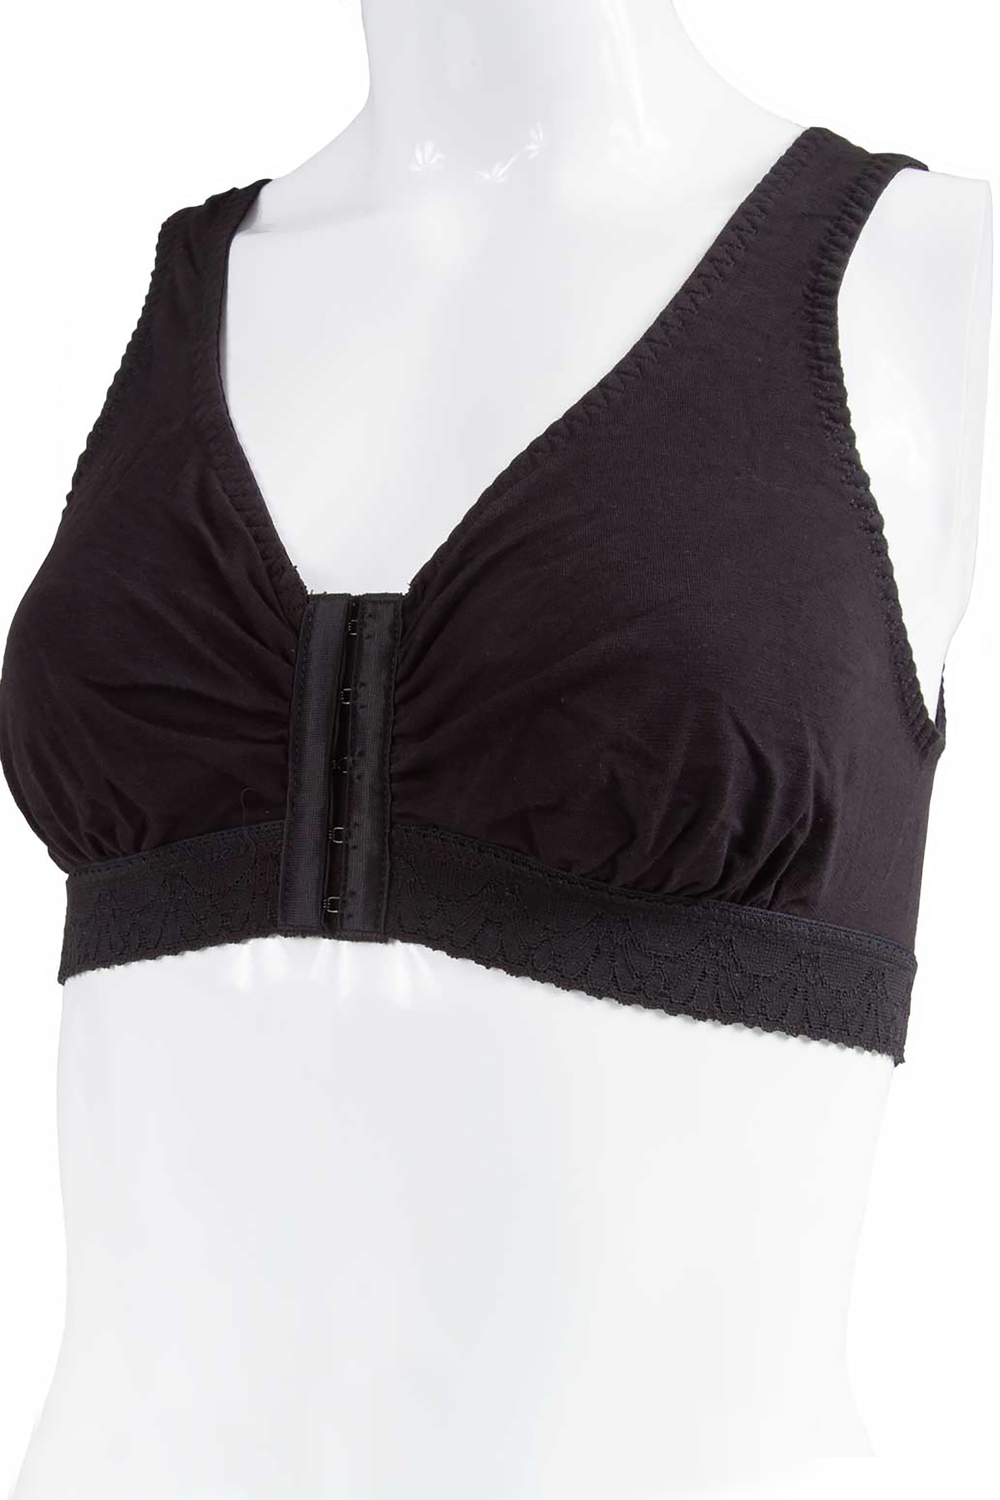 Full Freedom Comfort Bra, 1 unit, 36, Black – Carole Martin : Underwear